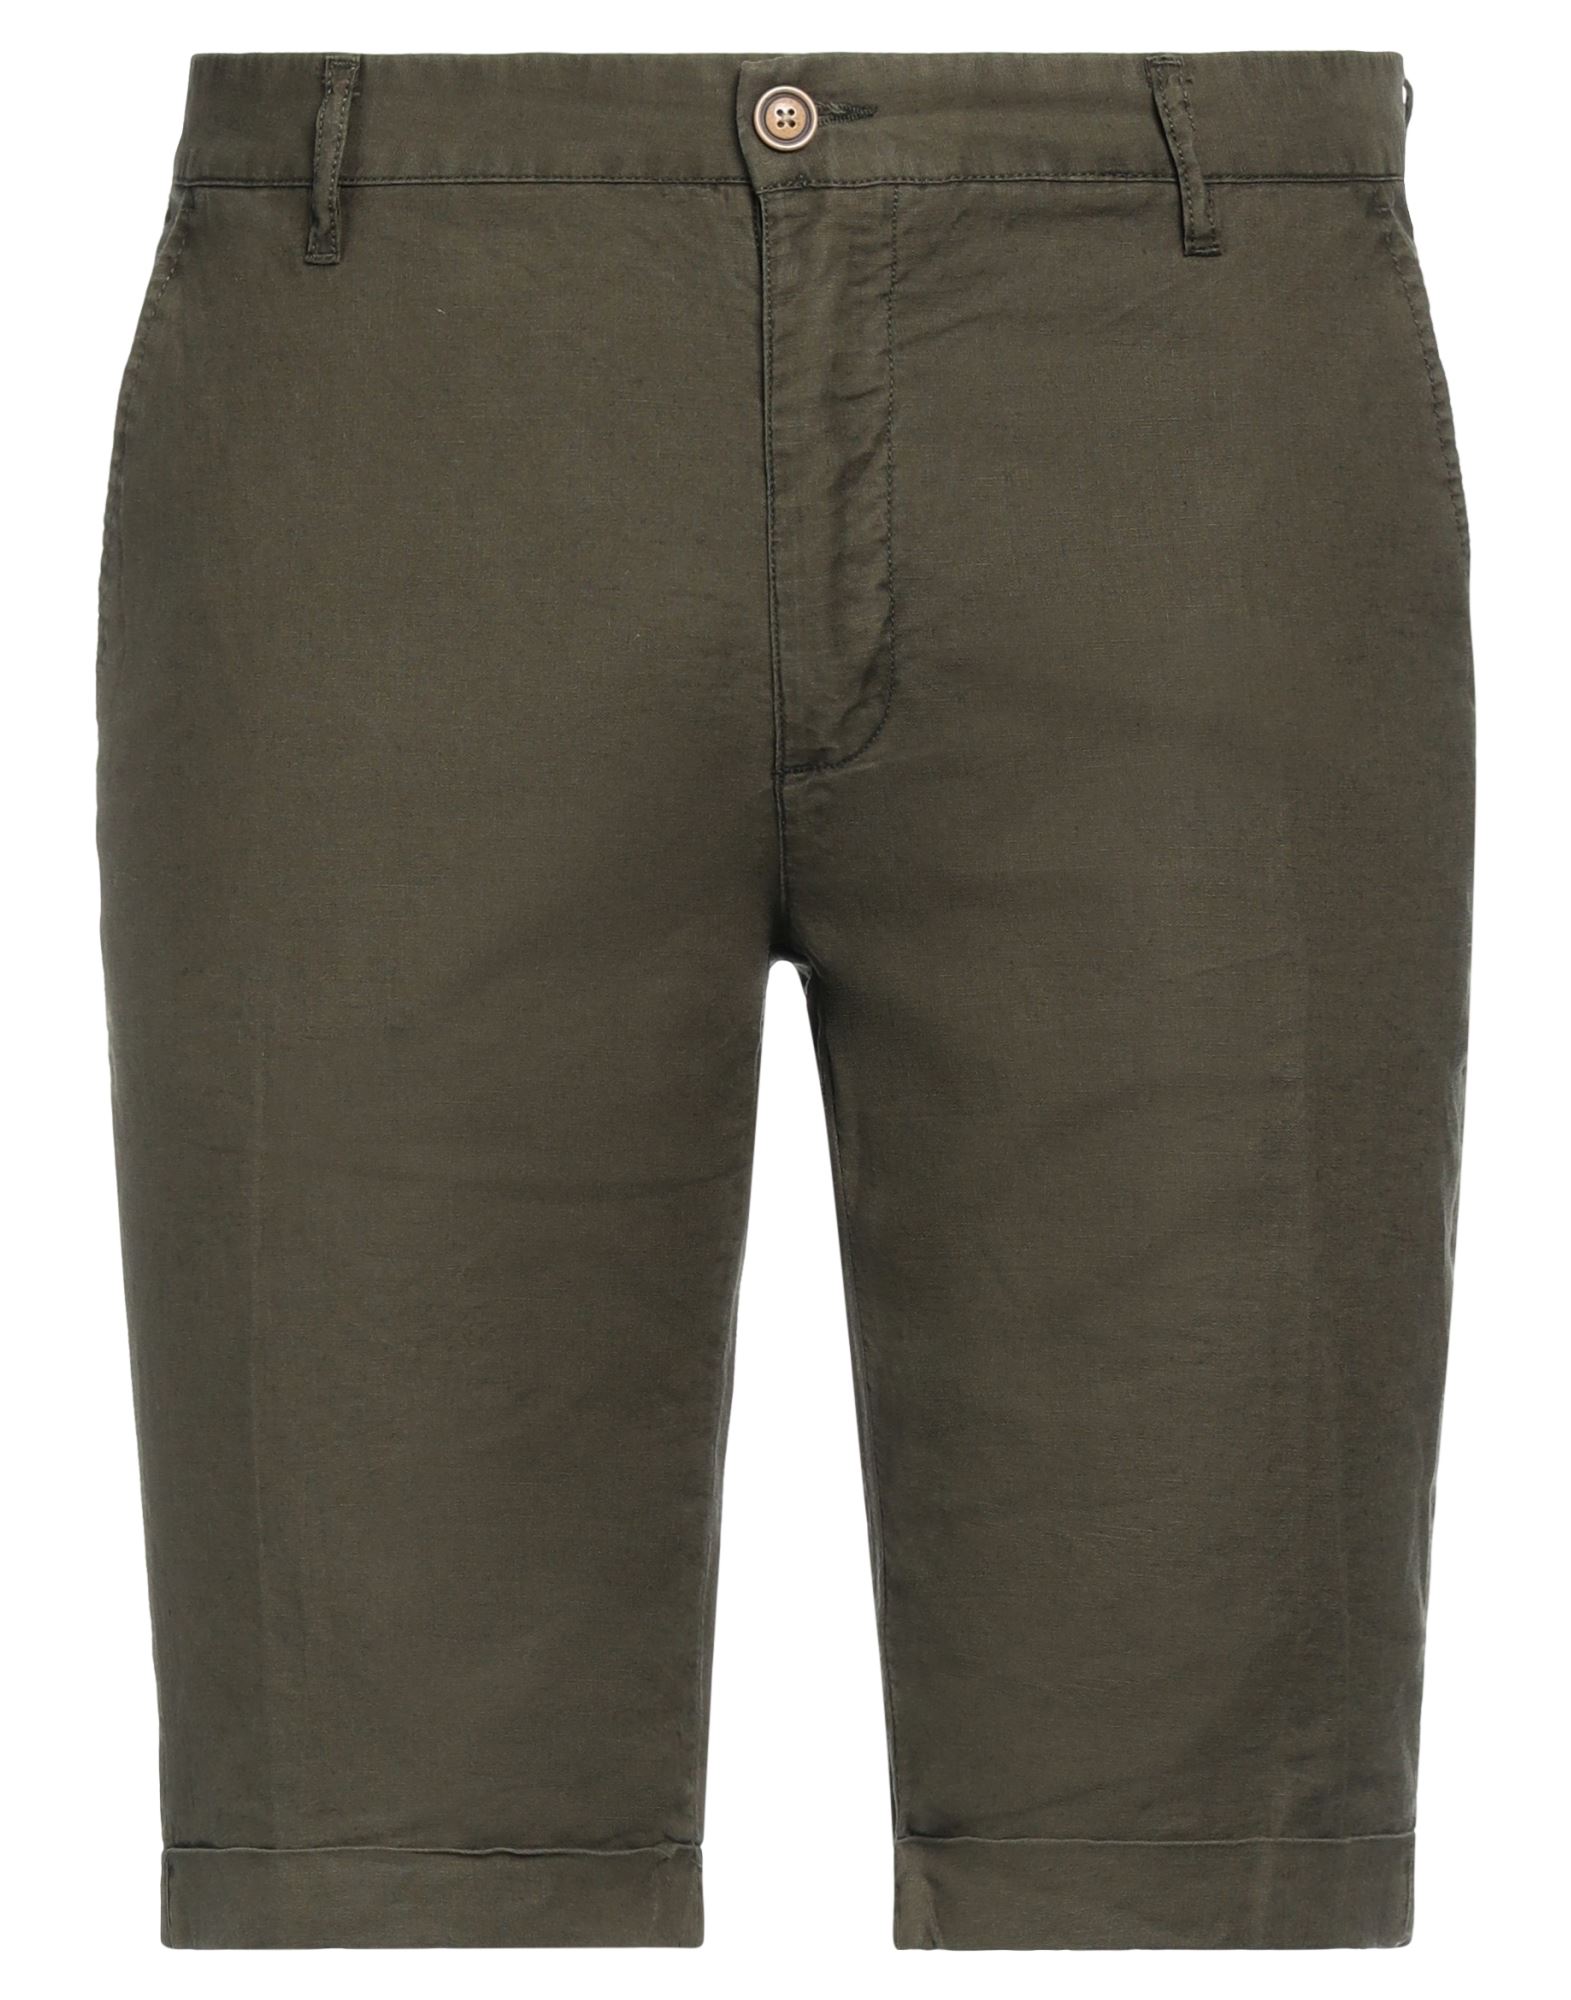 Markup Man Shorts & Bermuda Shorts Military Green Size 28 Linen, Cotton